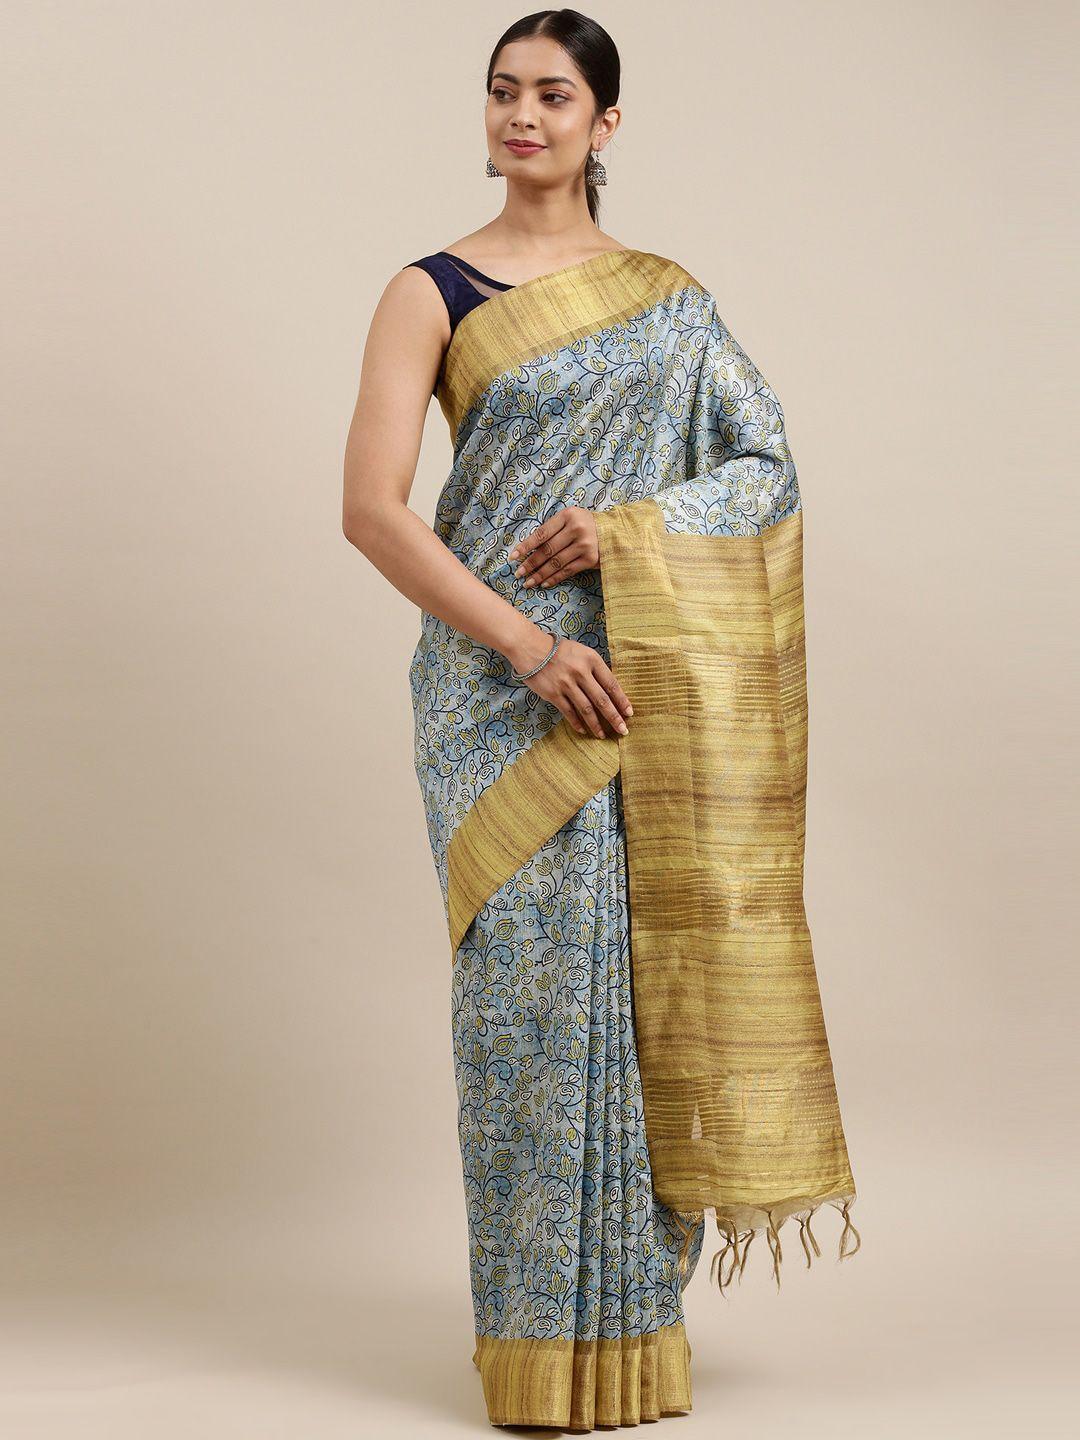 the chennai silks blue & gold-toned floral printed saree